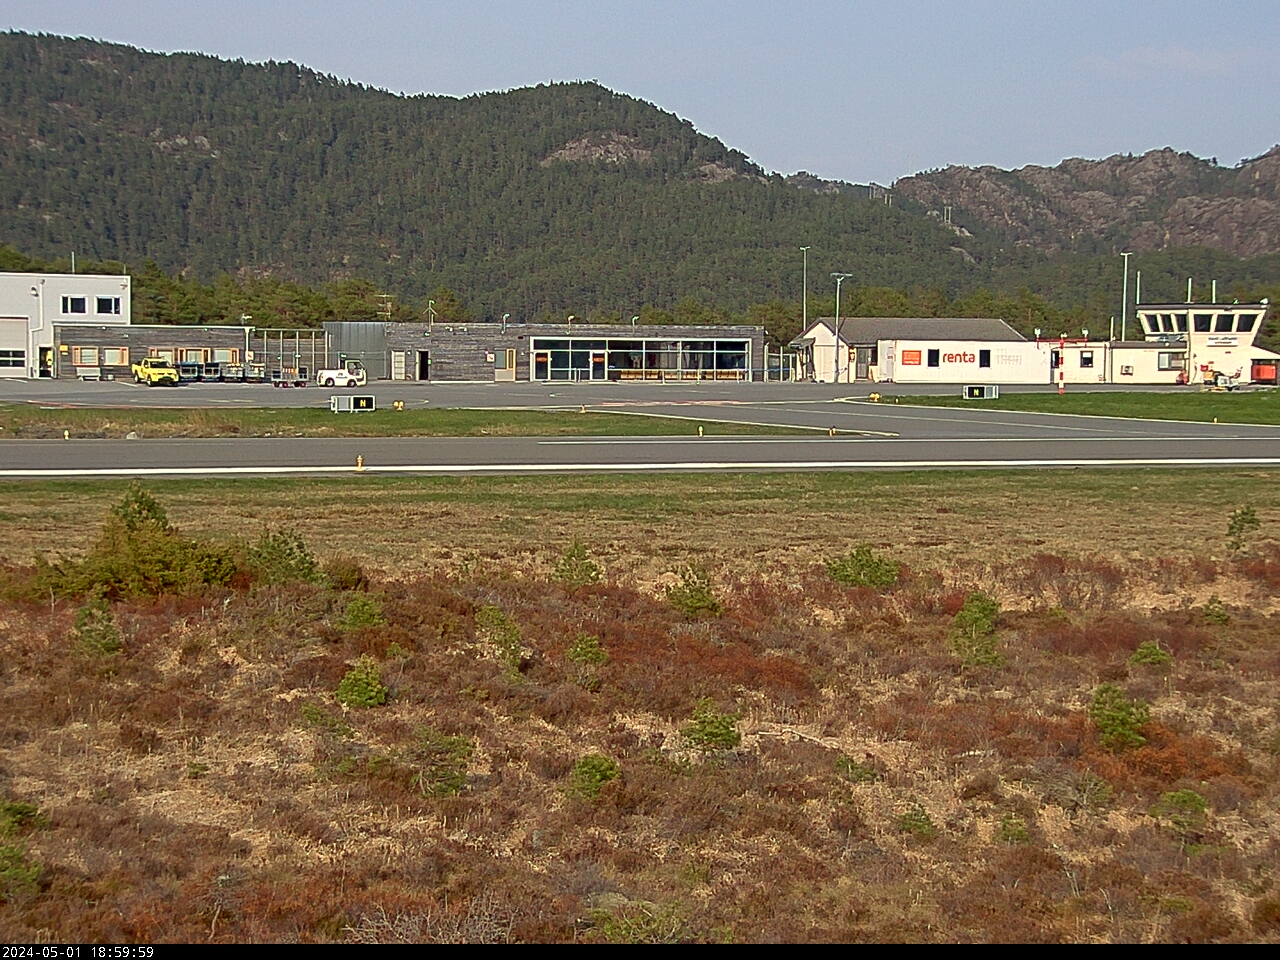 Stokksund - Stord Lufthavn